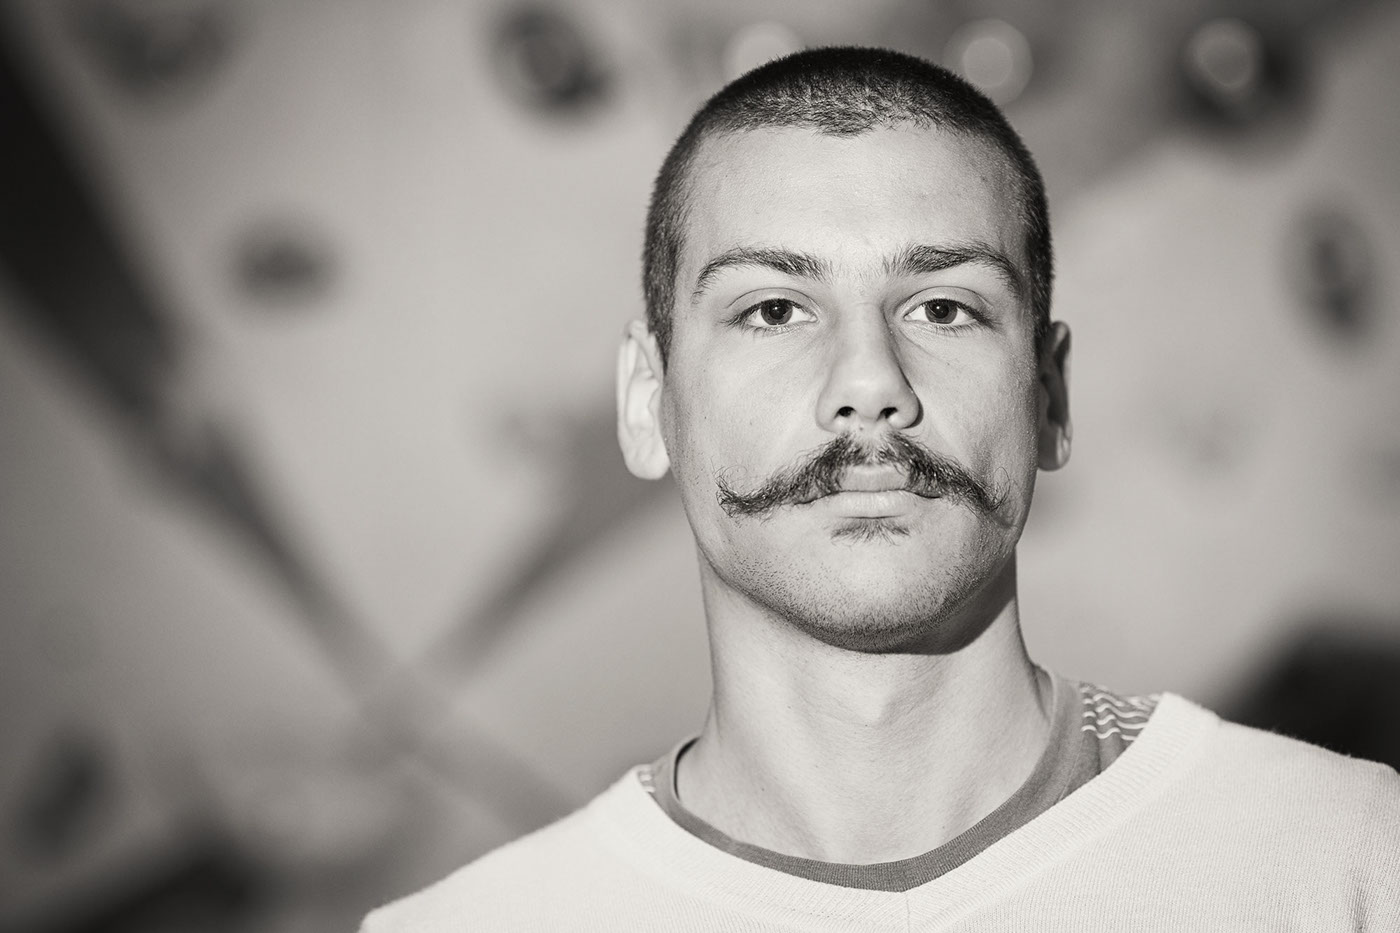 moustaches belgrade beograd Serbia srbija mirko nahmijas movembar Movember facial hair nahmijas portrait bw exebition